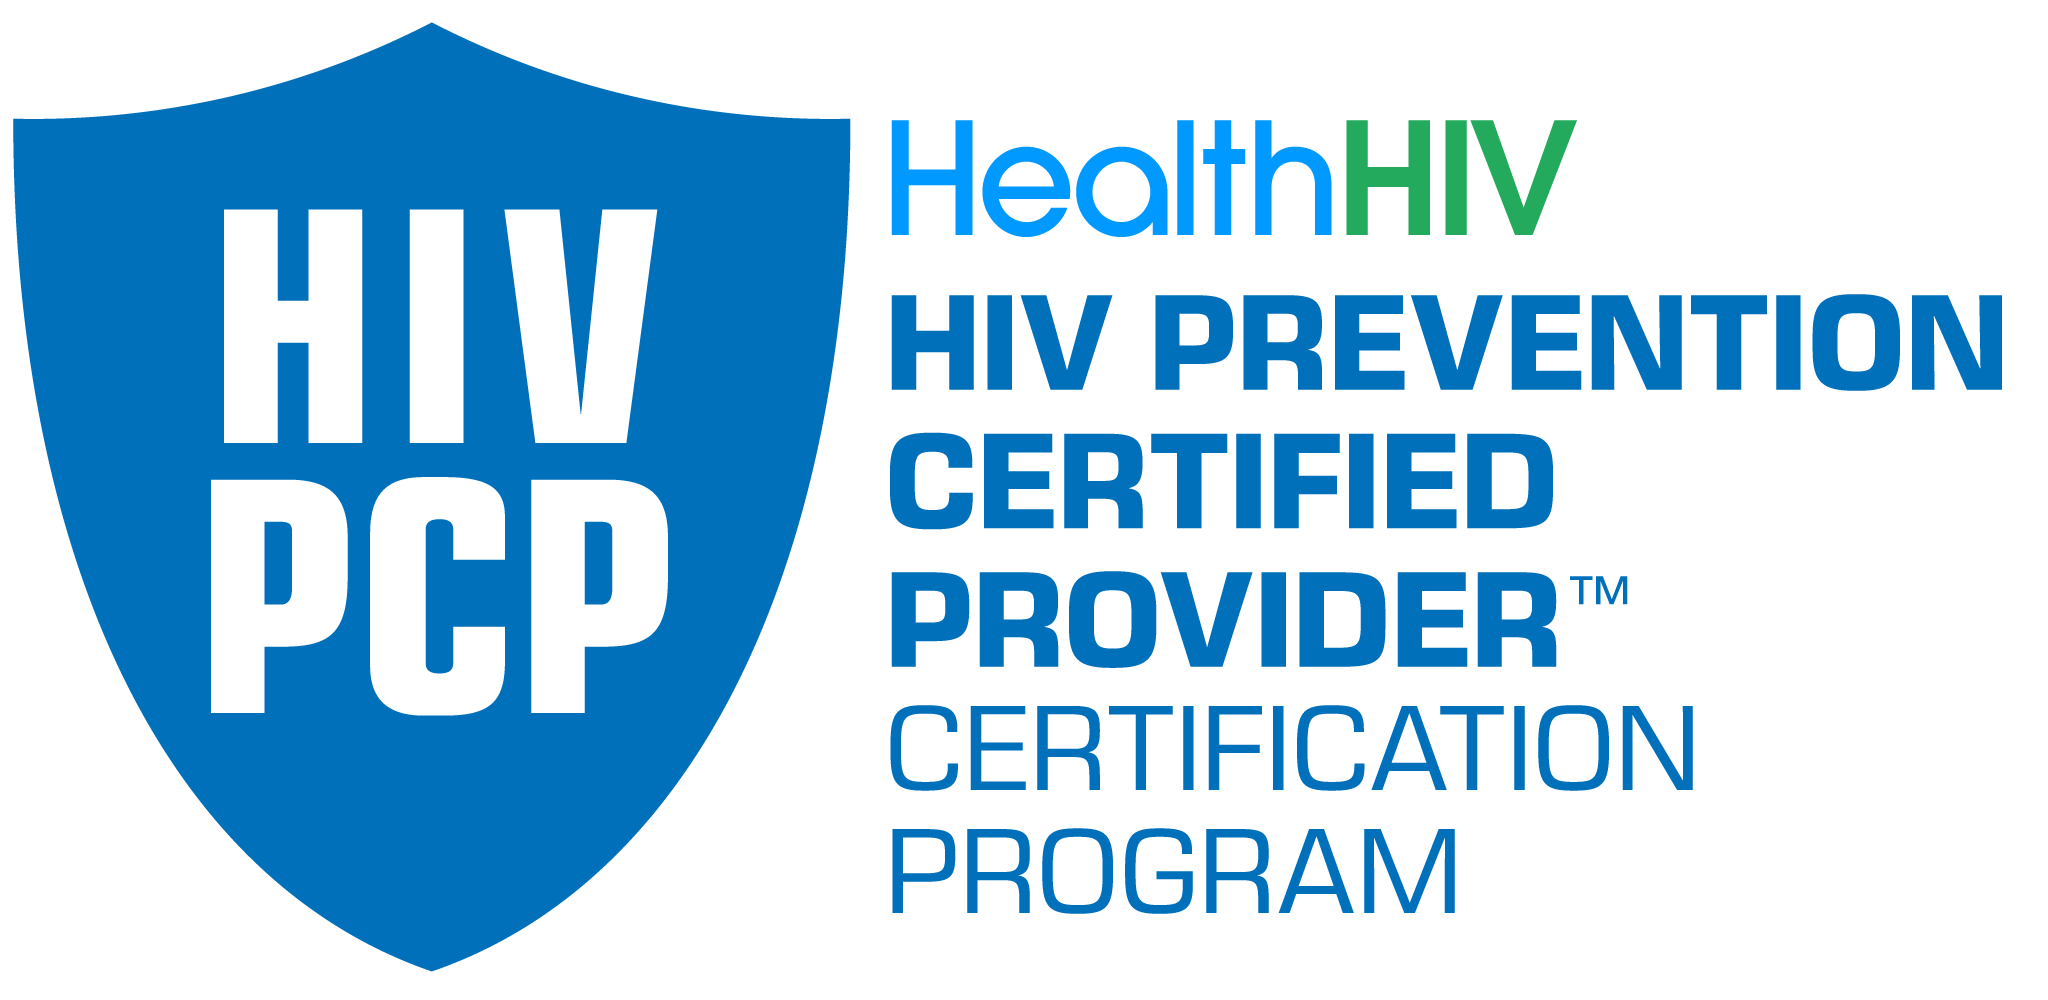 HealthHIV HIV Prevention Certified Provider Program